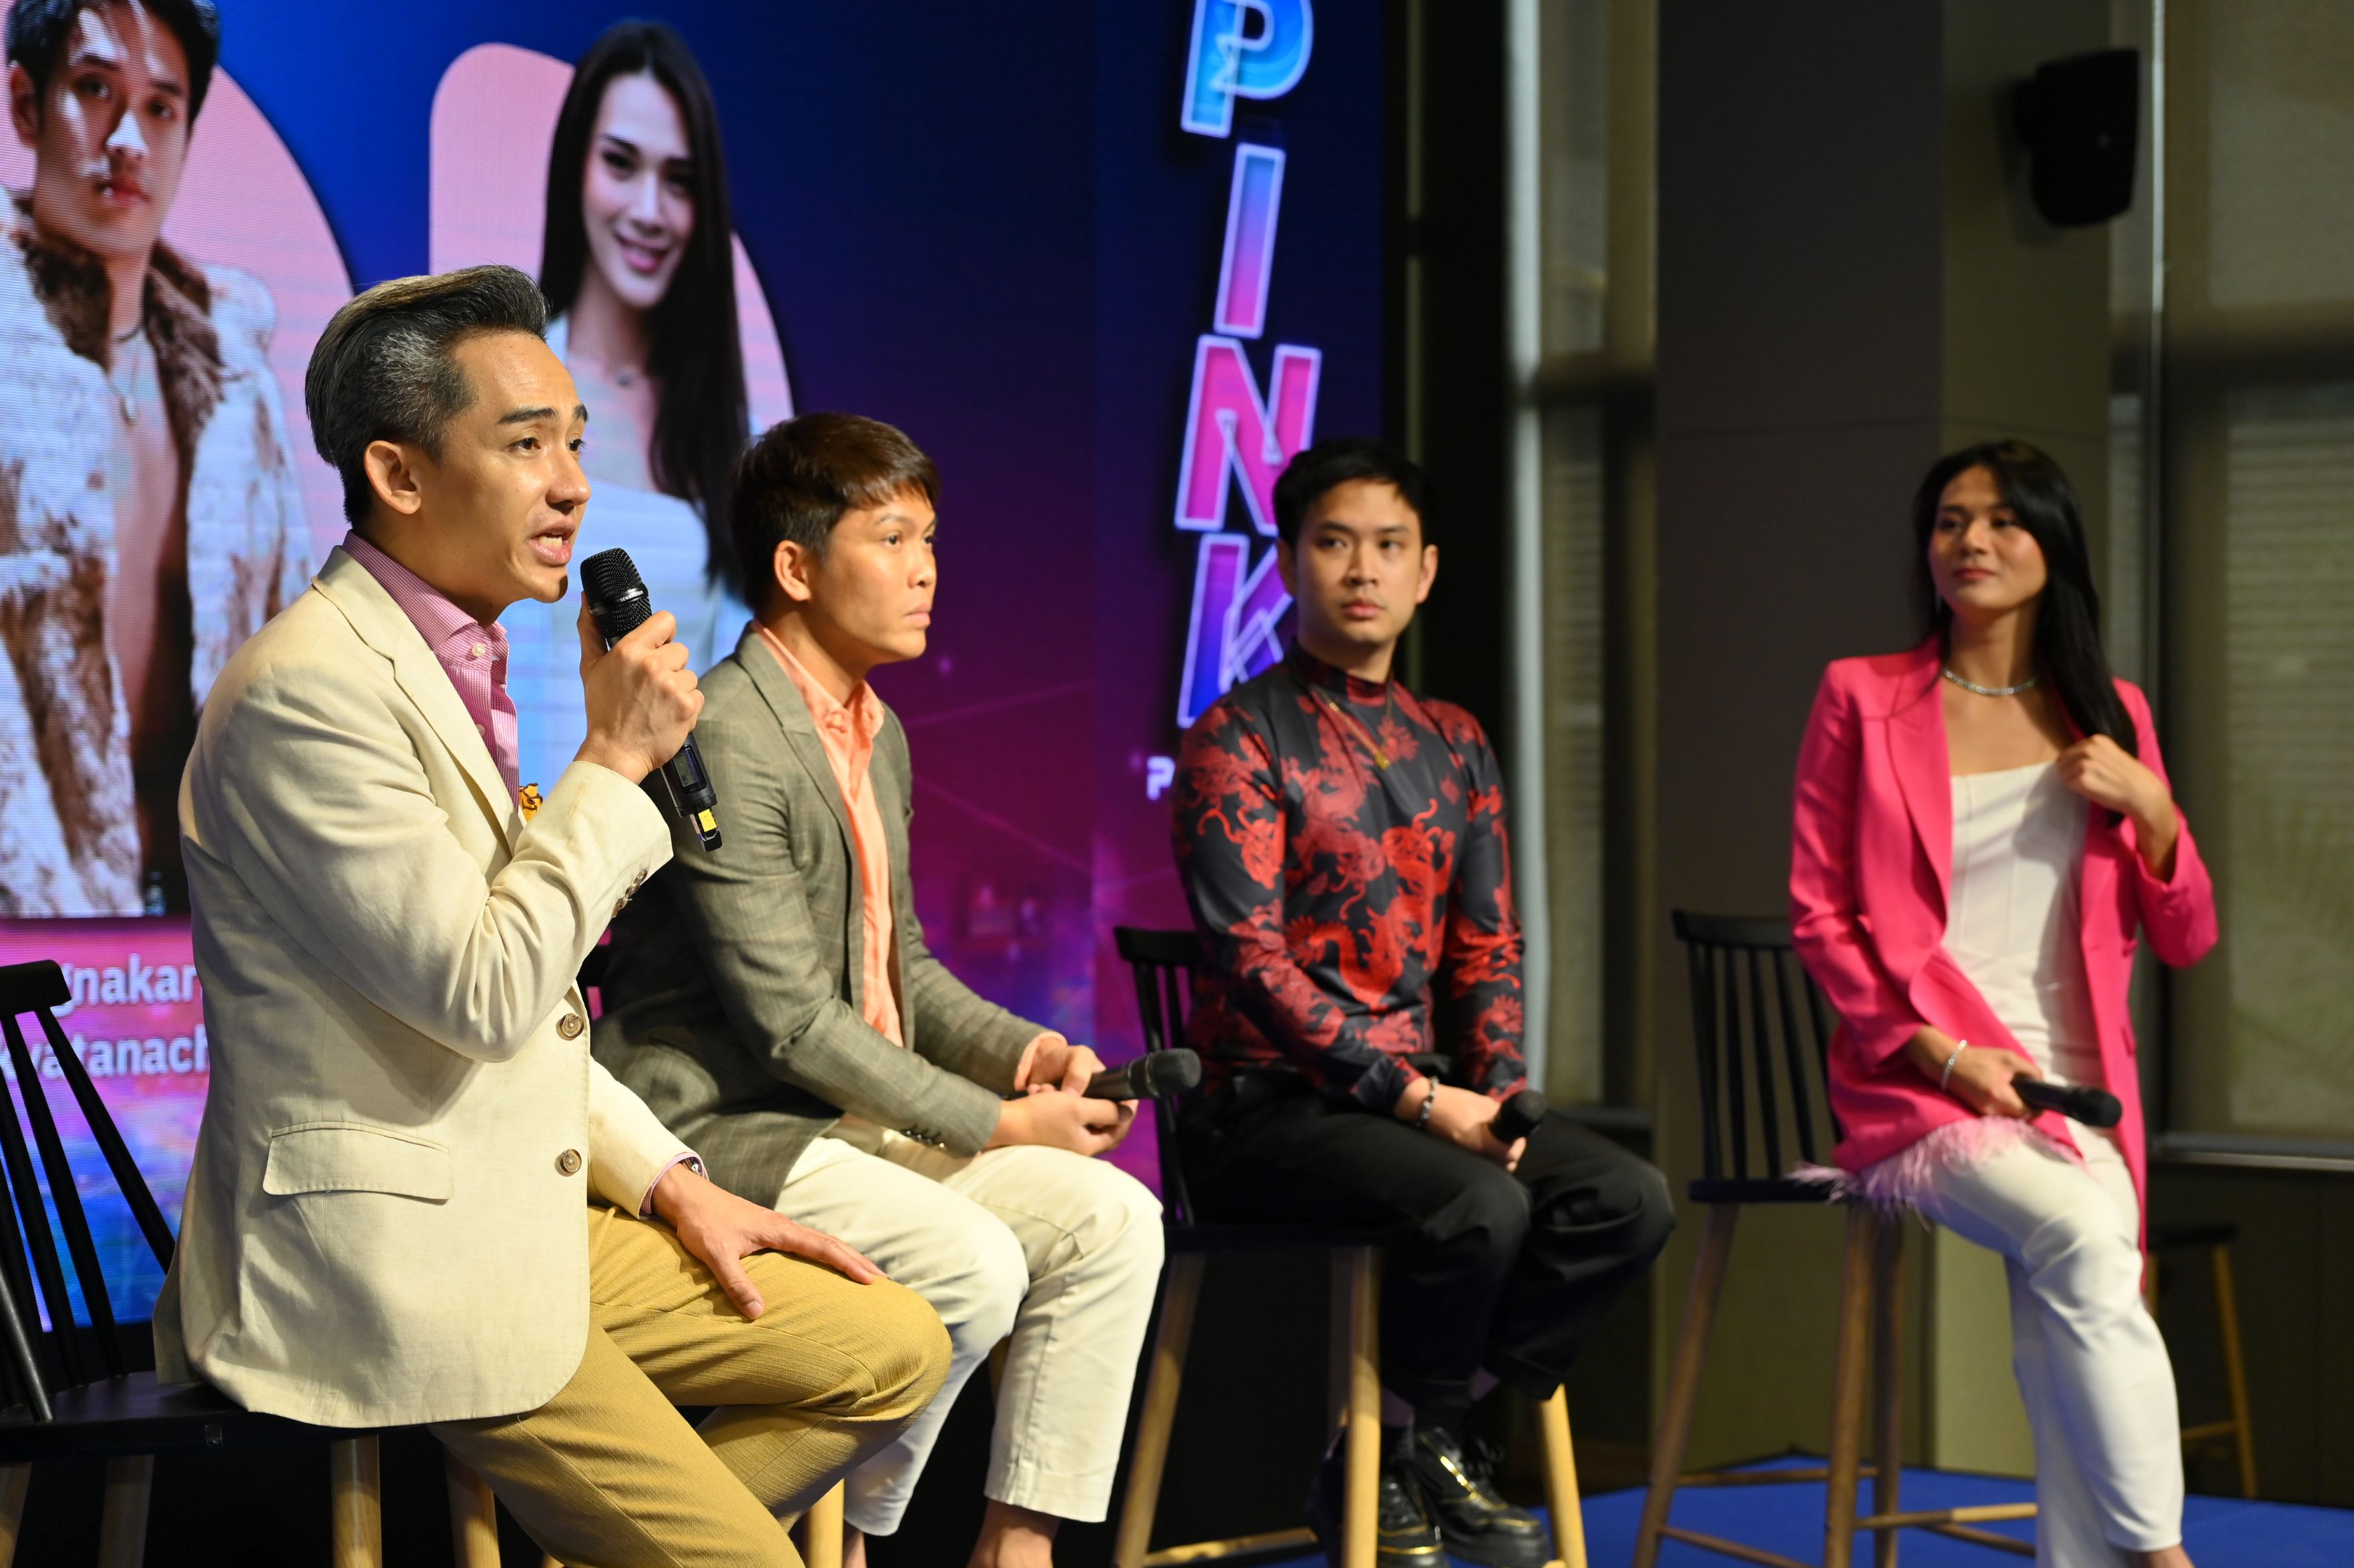 “Pink Power Up Business Forum” ก้าวแรกของไทยสู่ศูนย์กลาง Pink Economy โลก